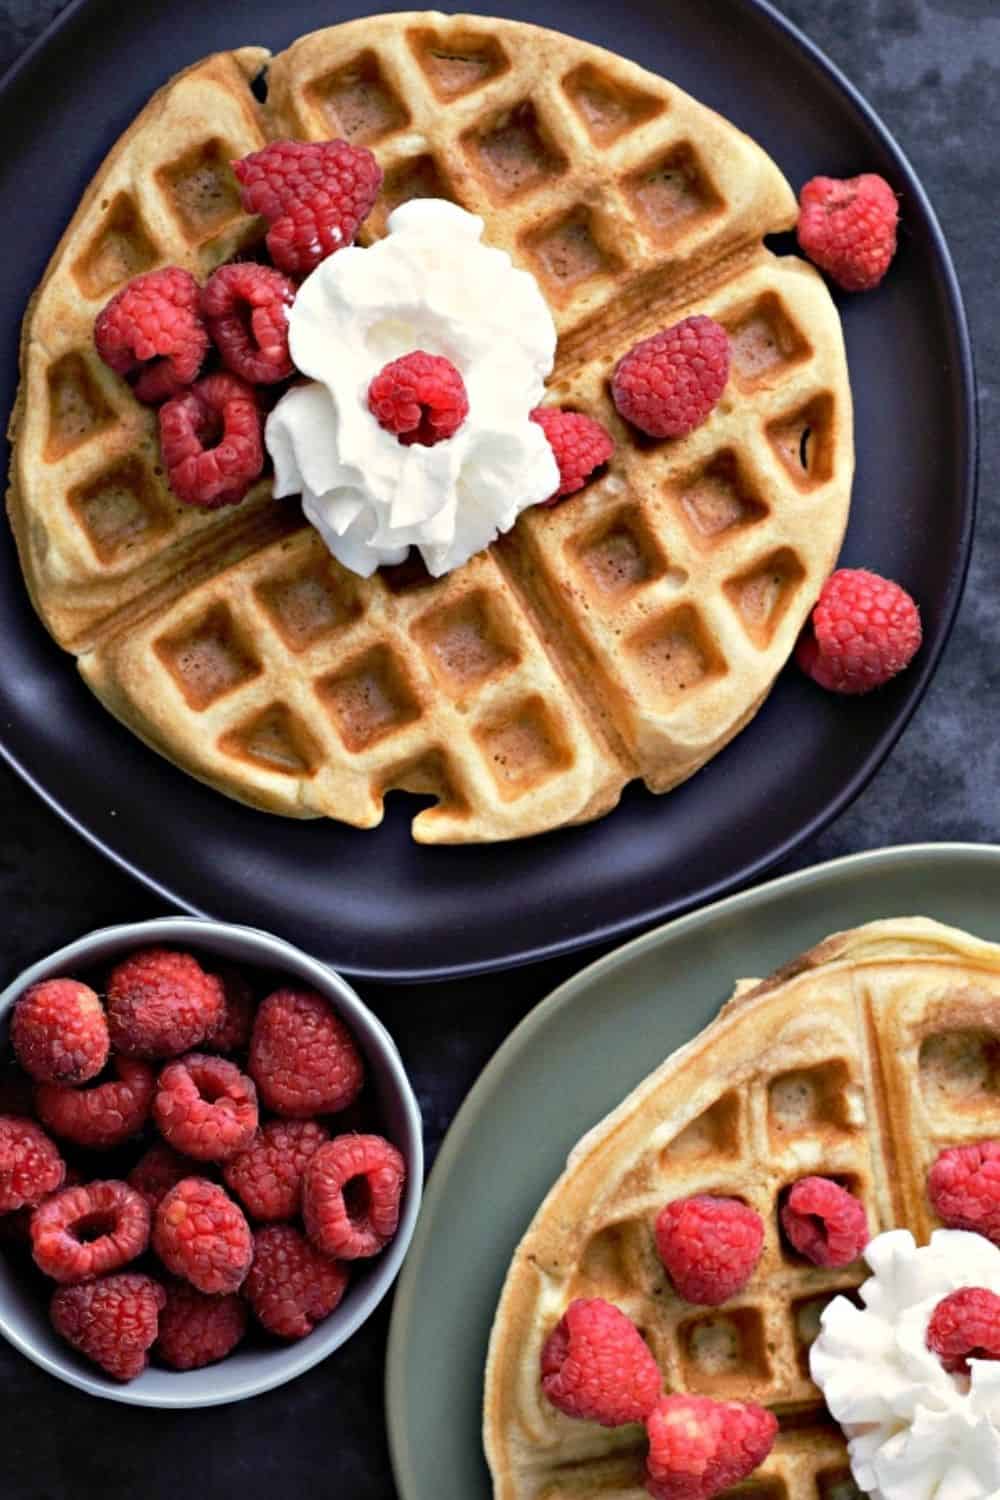 https://zonacooks.com/wp-content/uploads/2018/04/Homemade-Belgian-Waffles-Recipe-for-Two-29.jpg